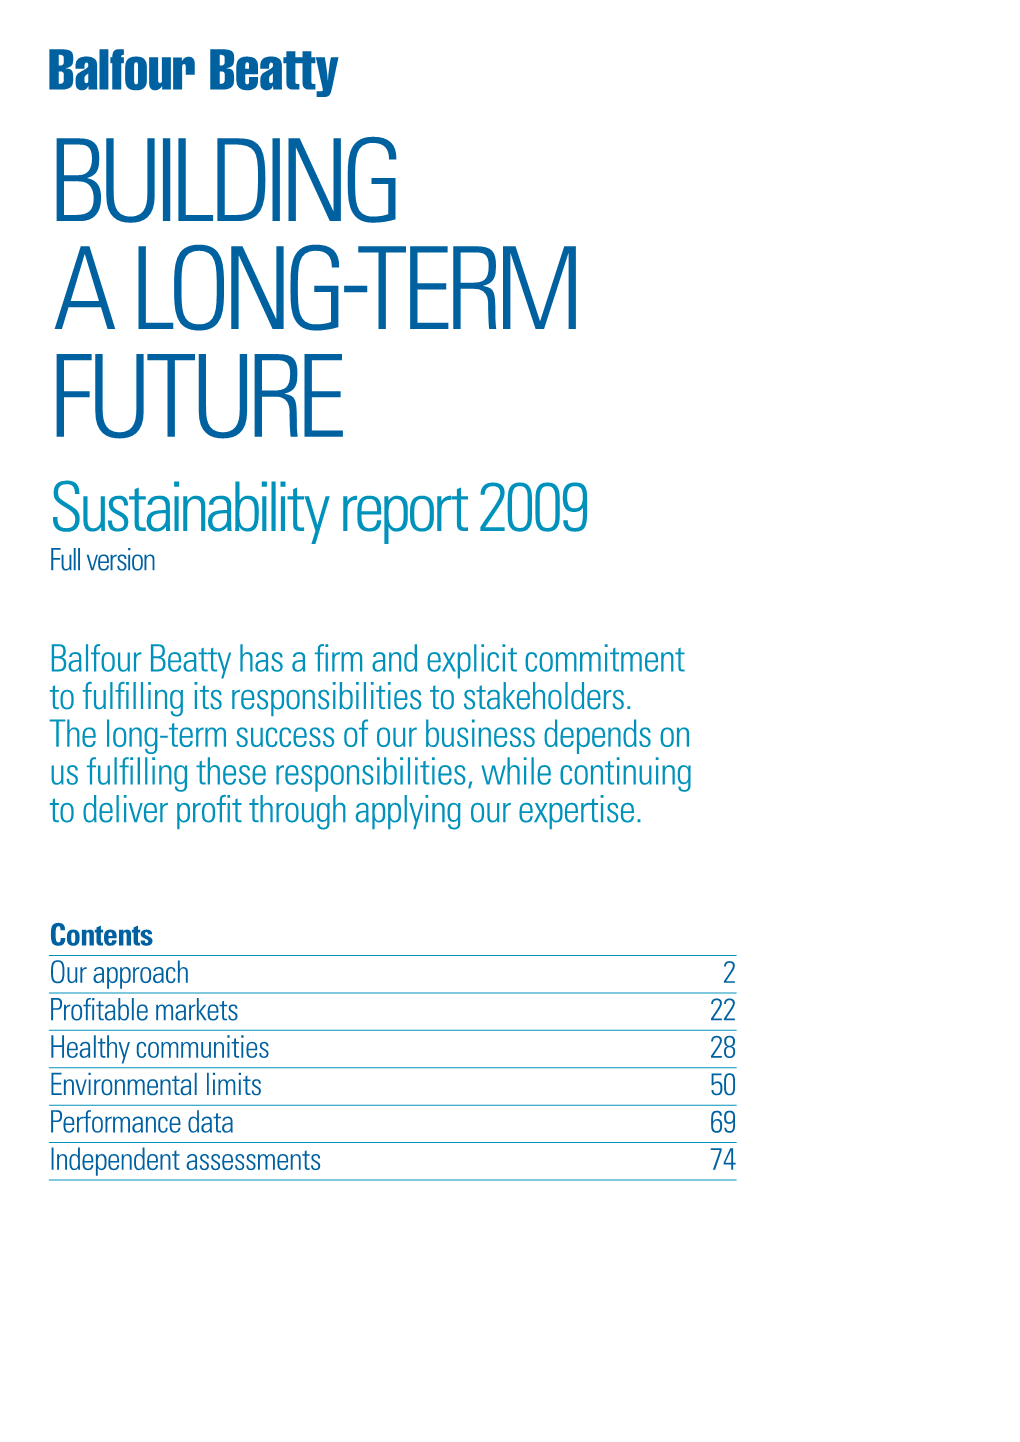 Sustainability Report 2009 Full Version